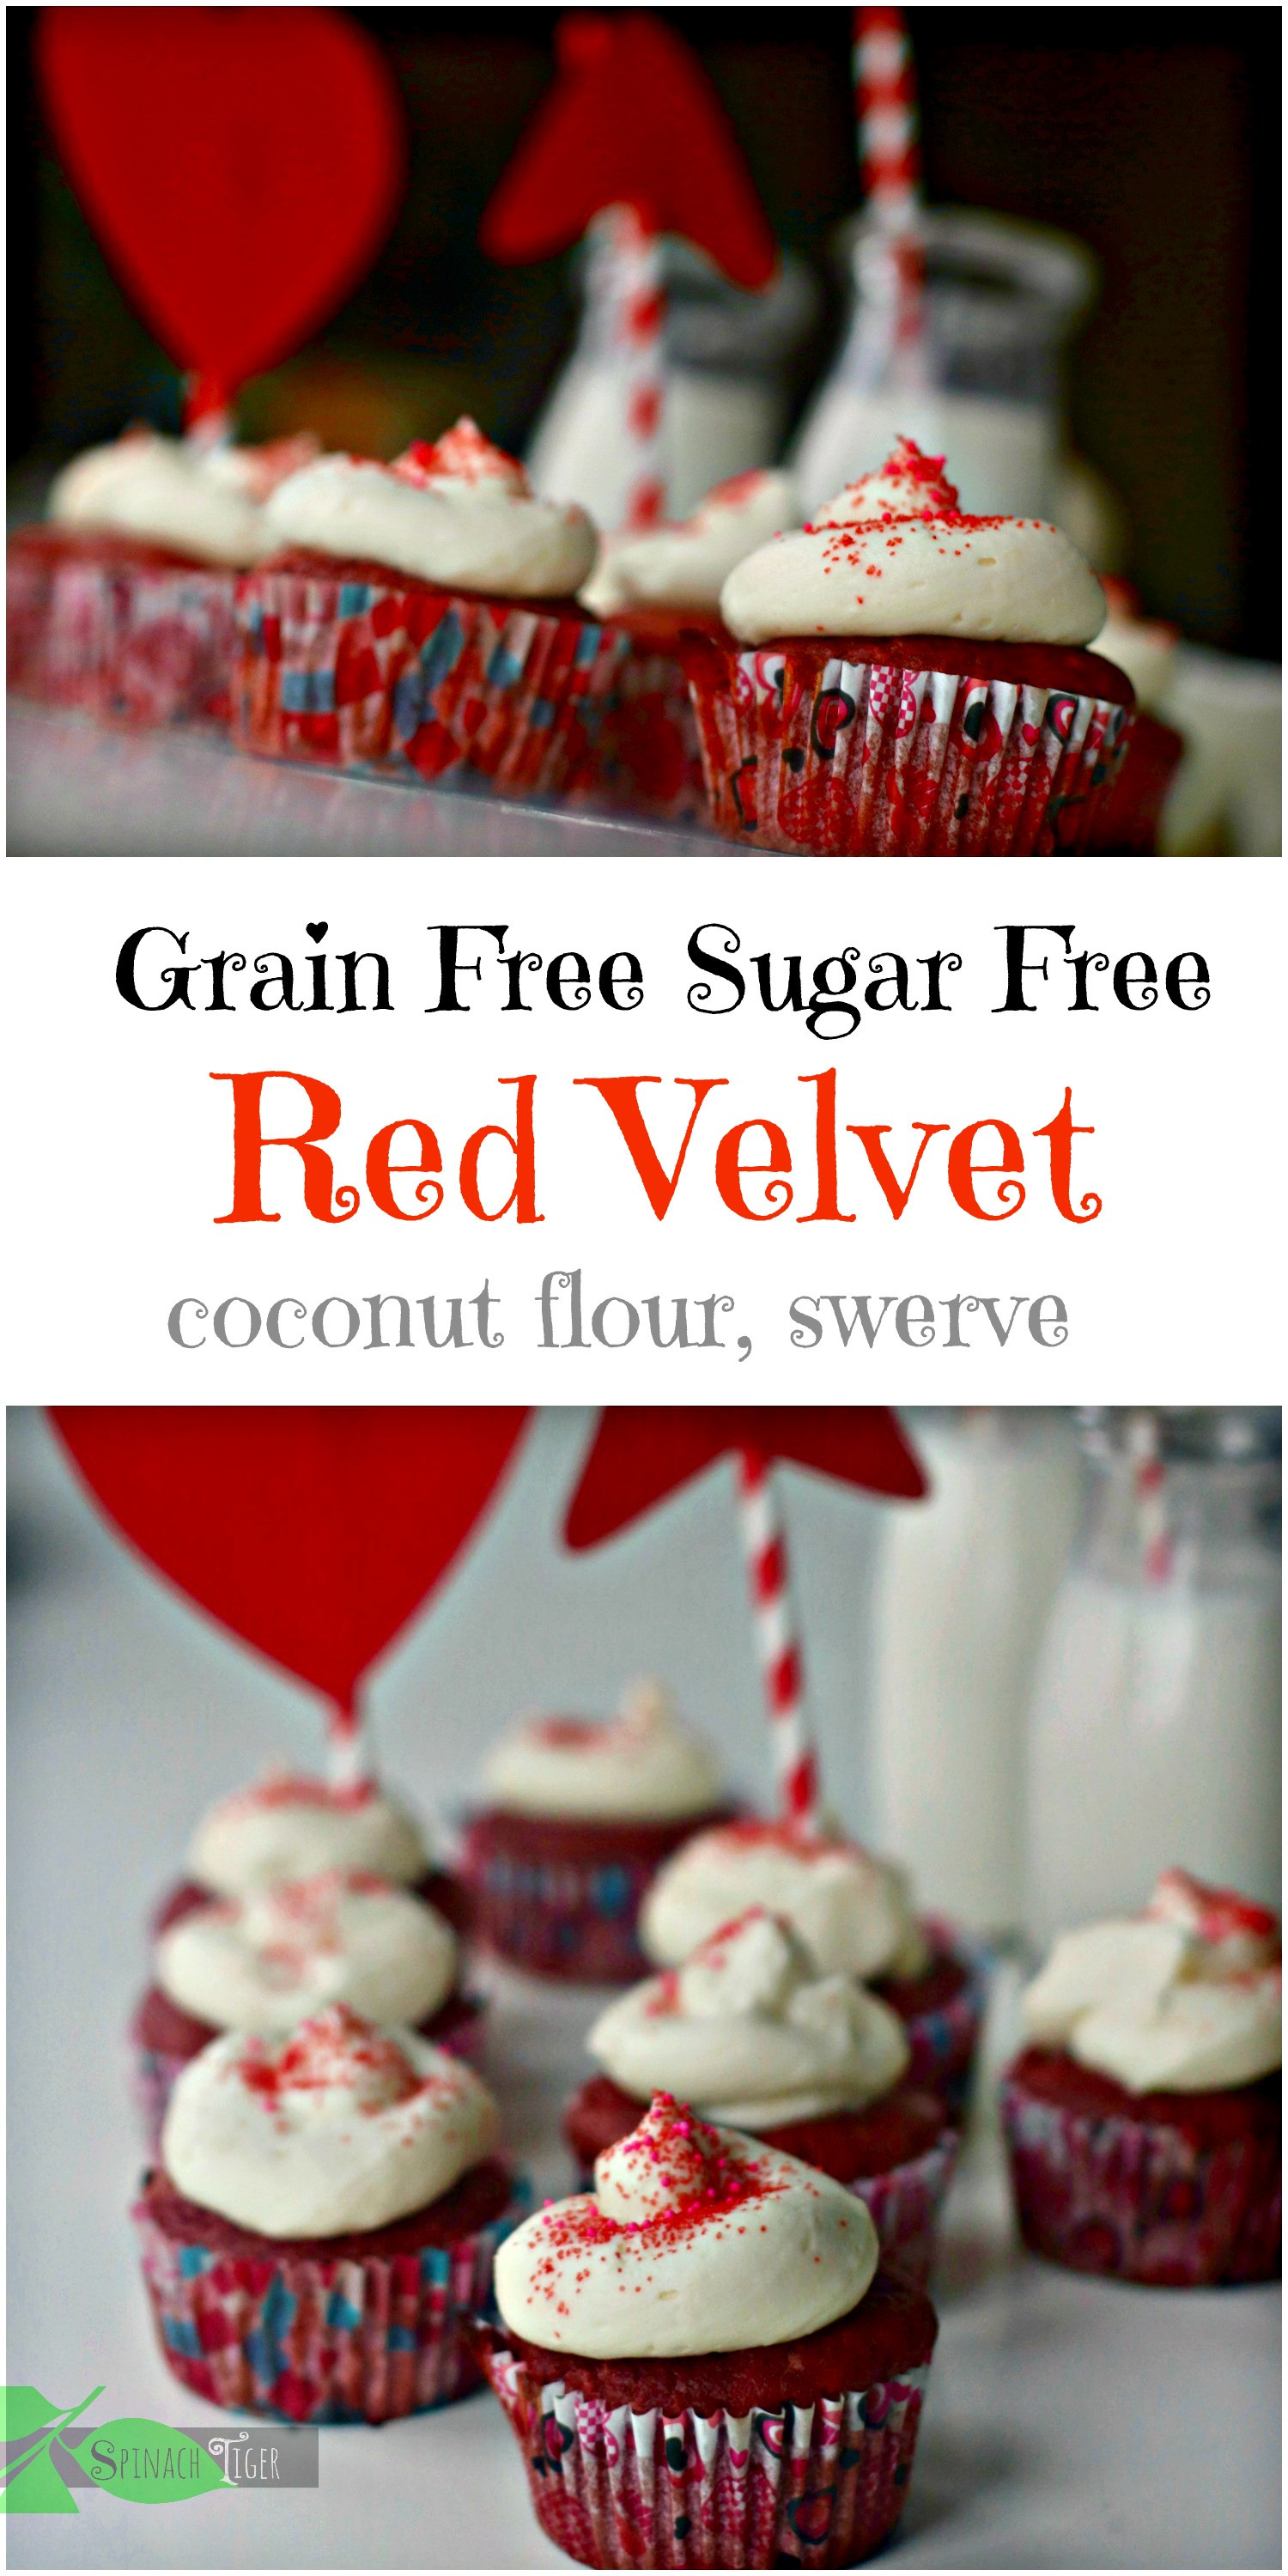 Keto Red Velvet Cake
 Best Sugar Free Red Velvet Cupcakes Grain Free Low Carb